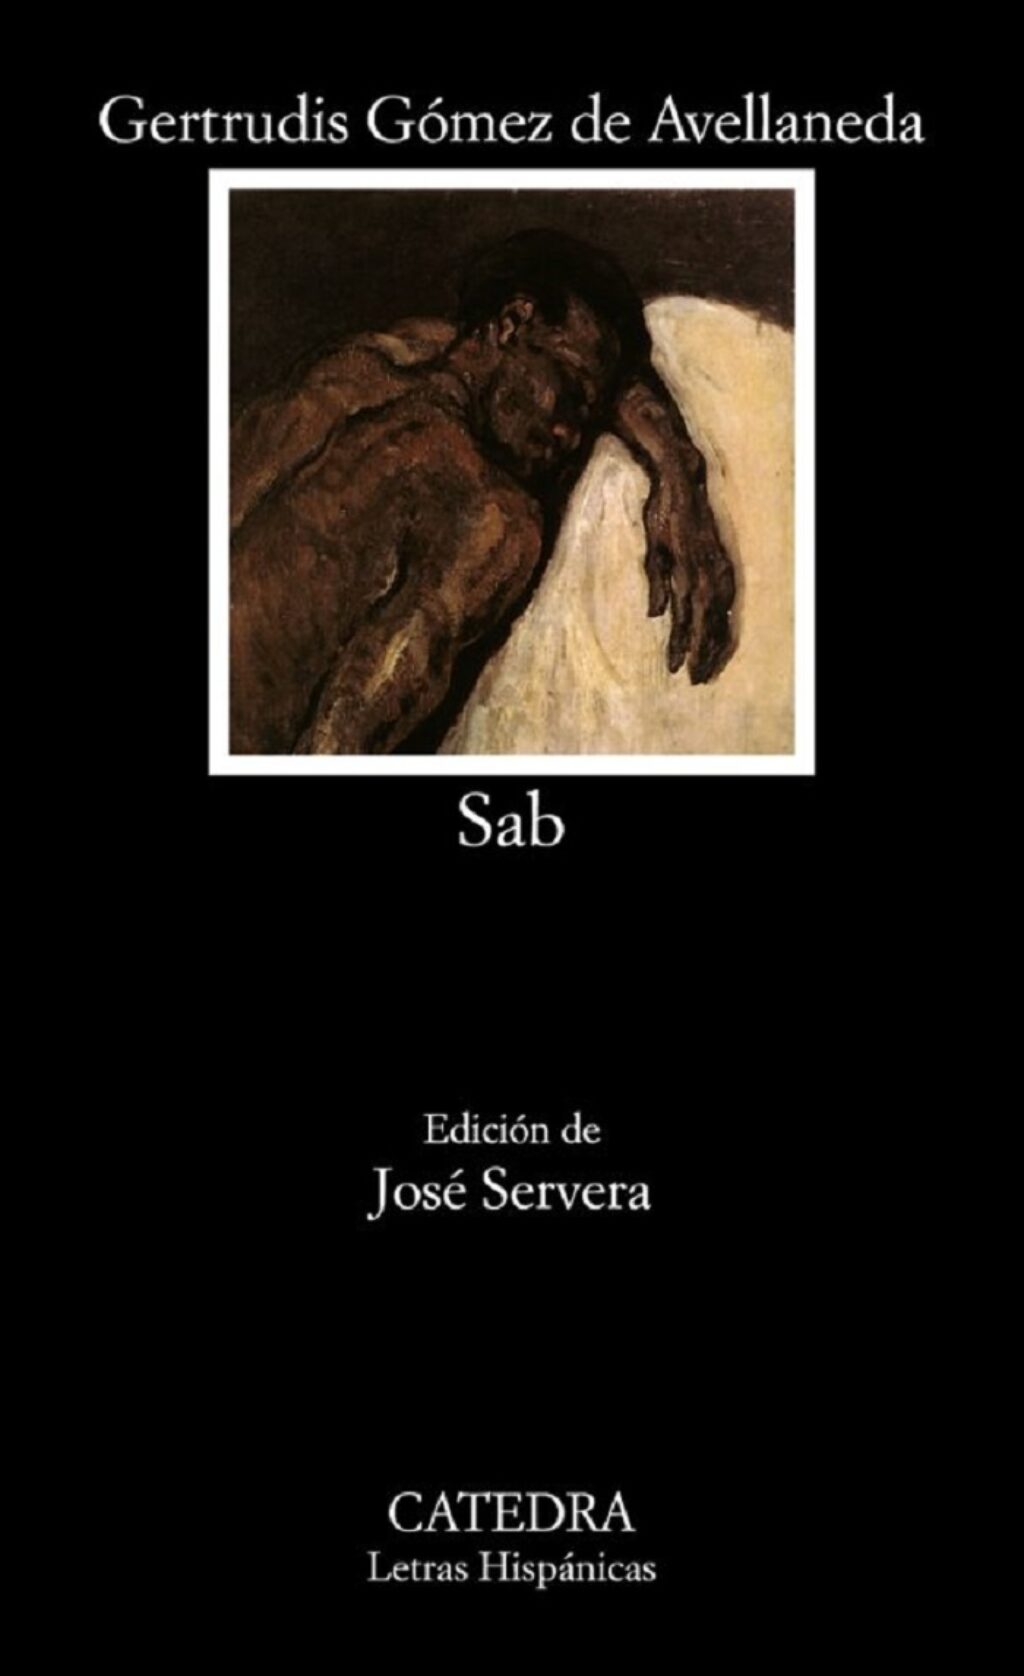 Portada de "Sab", novela de Gertrudis Gómez de Avellaneda para la edición de Cátedra, 1997. 